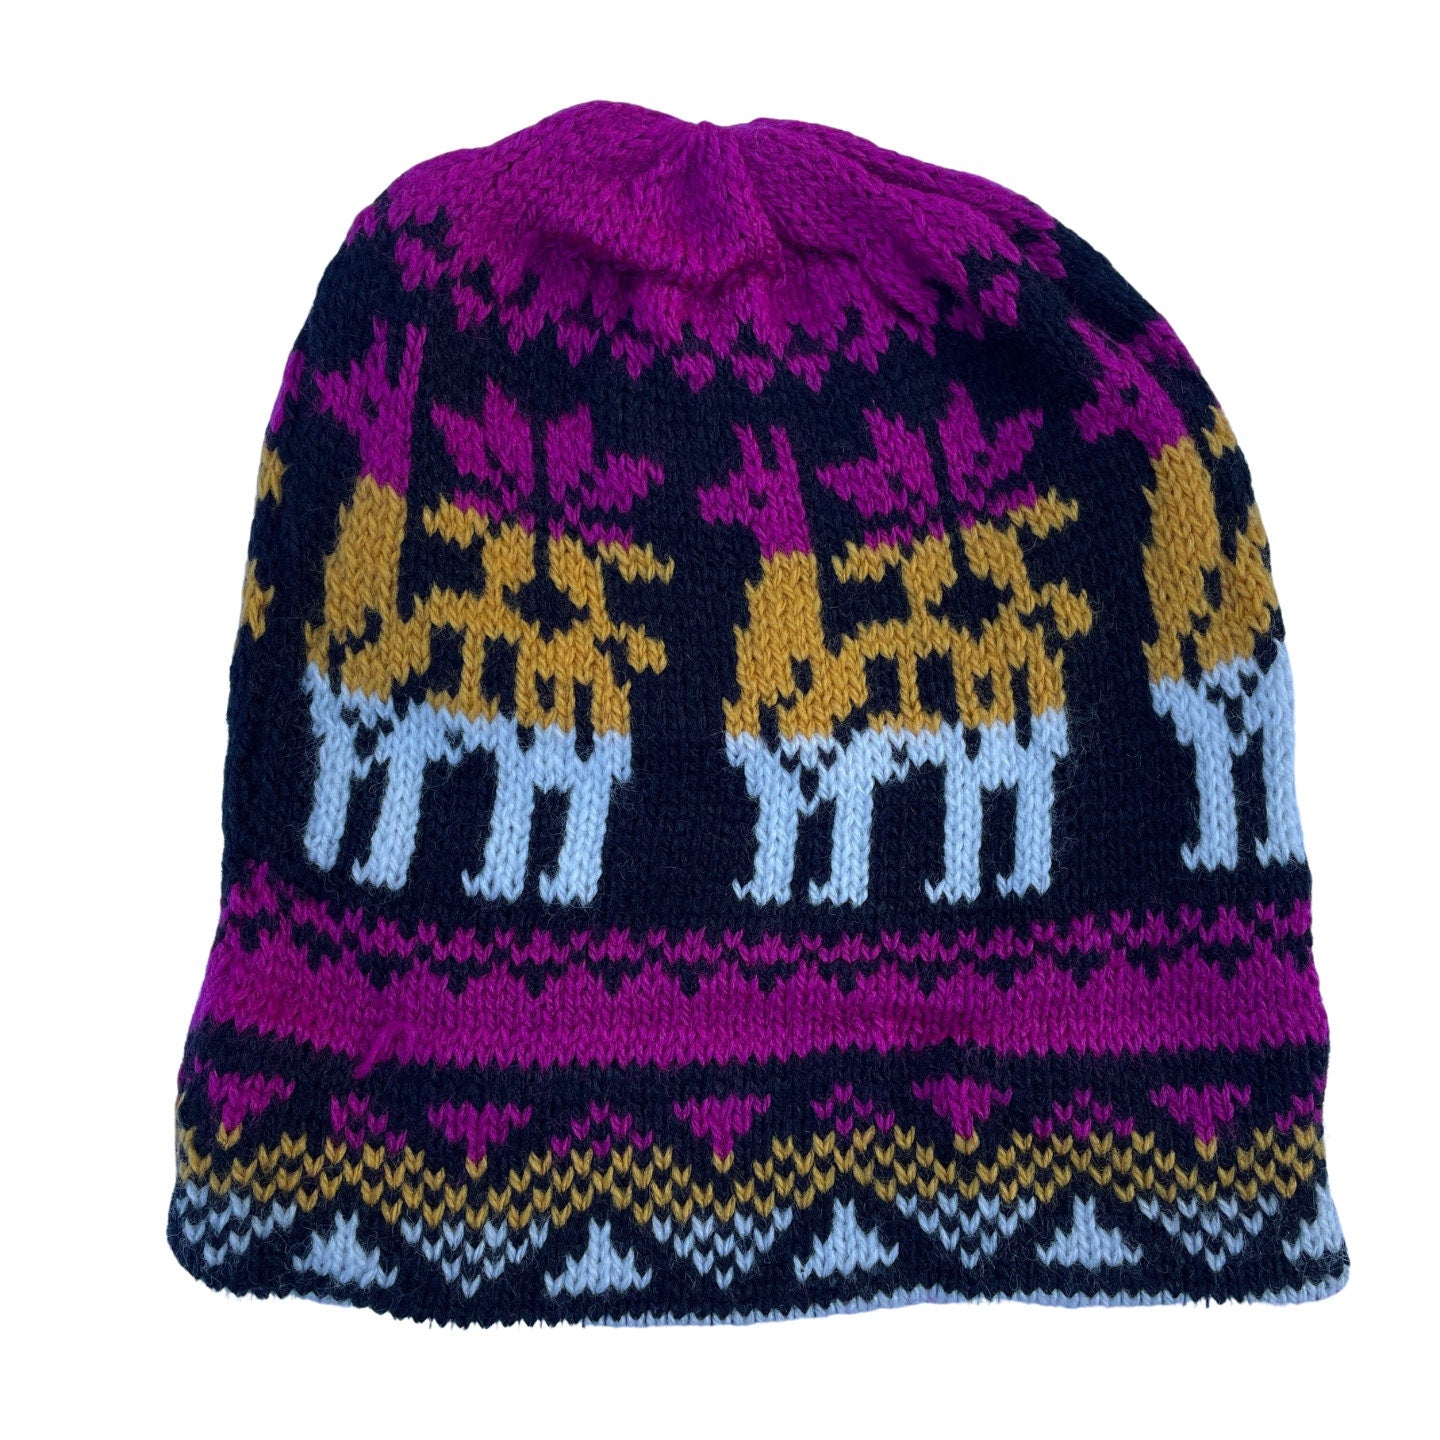 Knitted Alpaca Beanie Hat | Llama Magenta Black